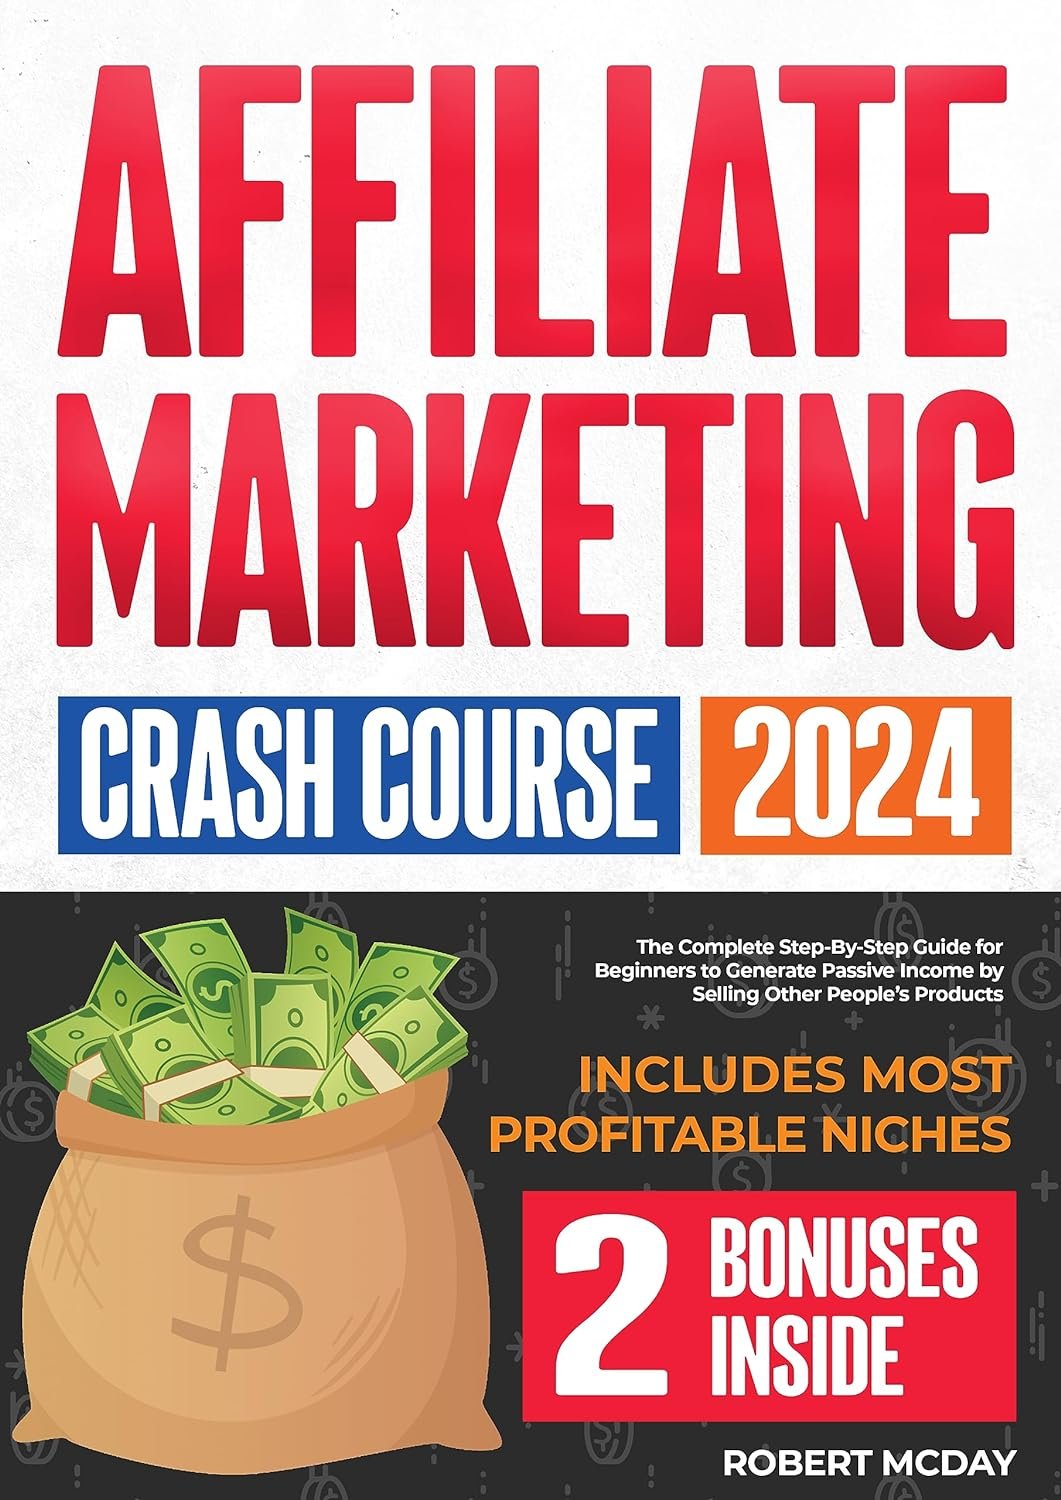 Affiliate Marketing Crash Course Review